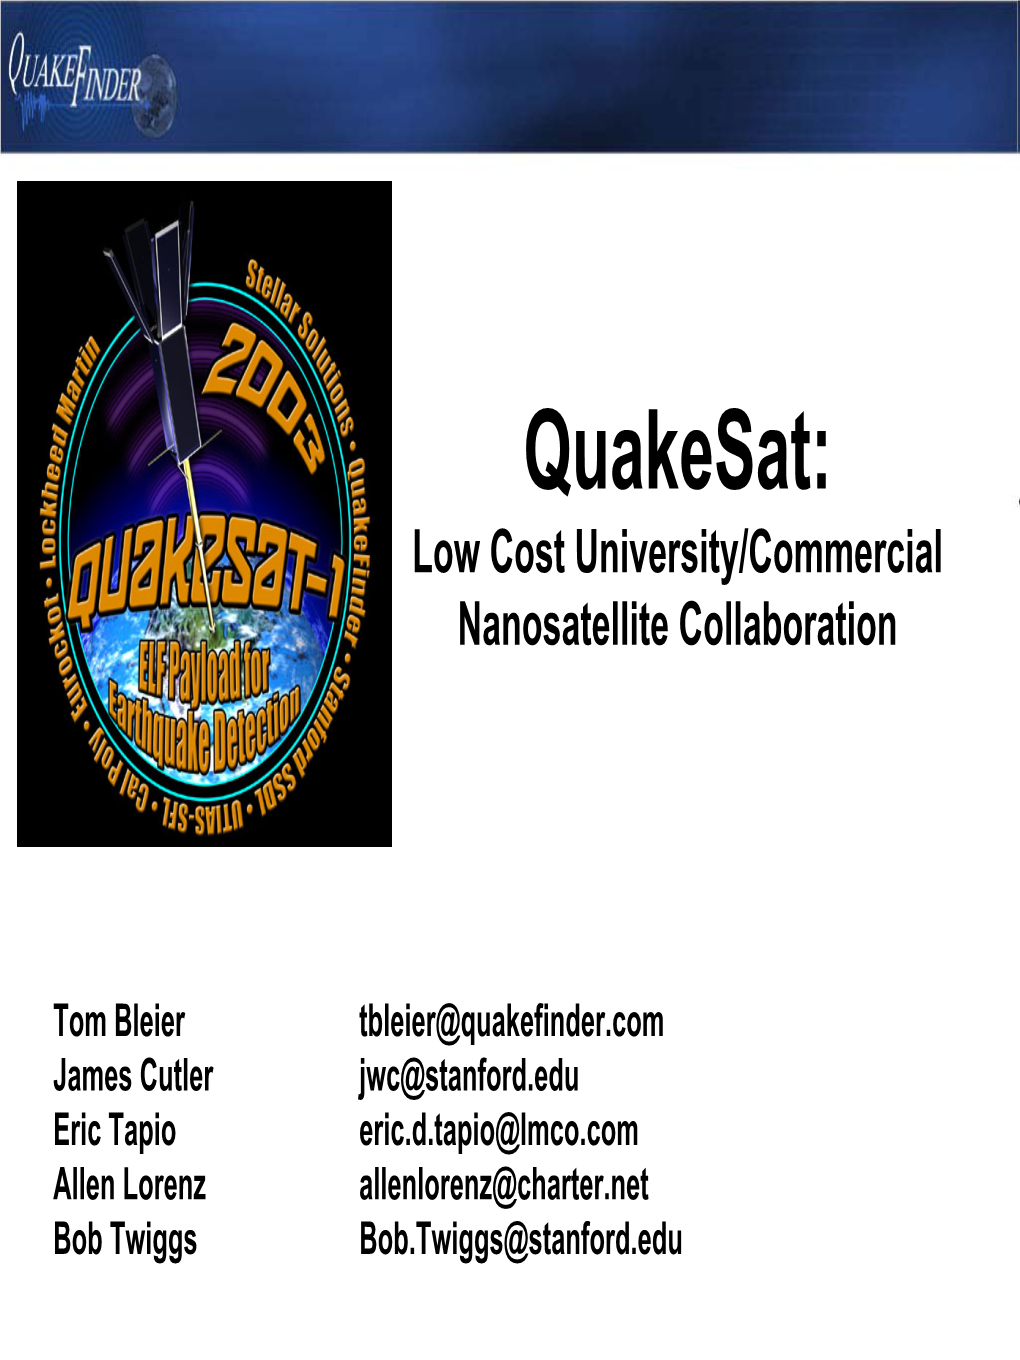 Quakesat: Low Cost University/Commercial Nanosatellite Collaboration